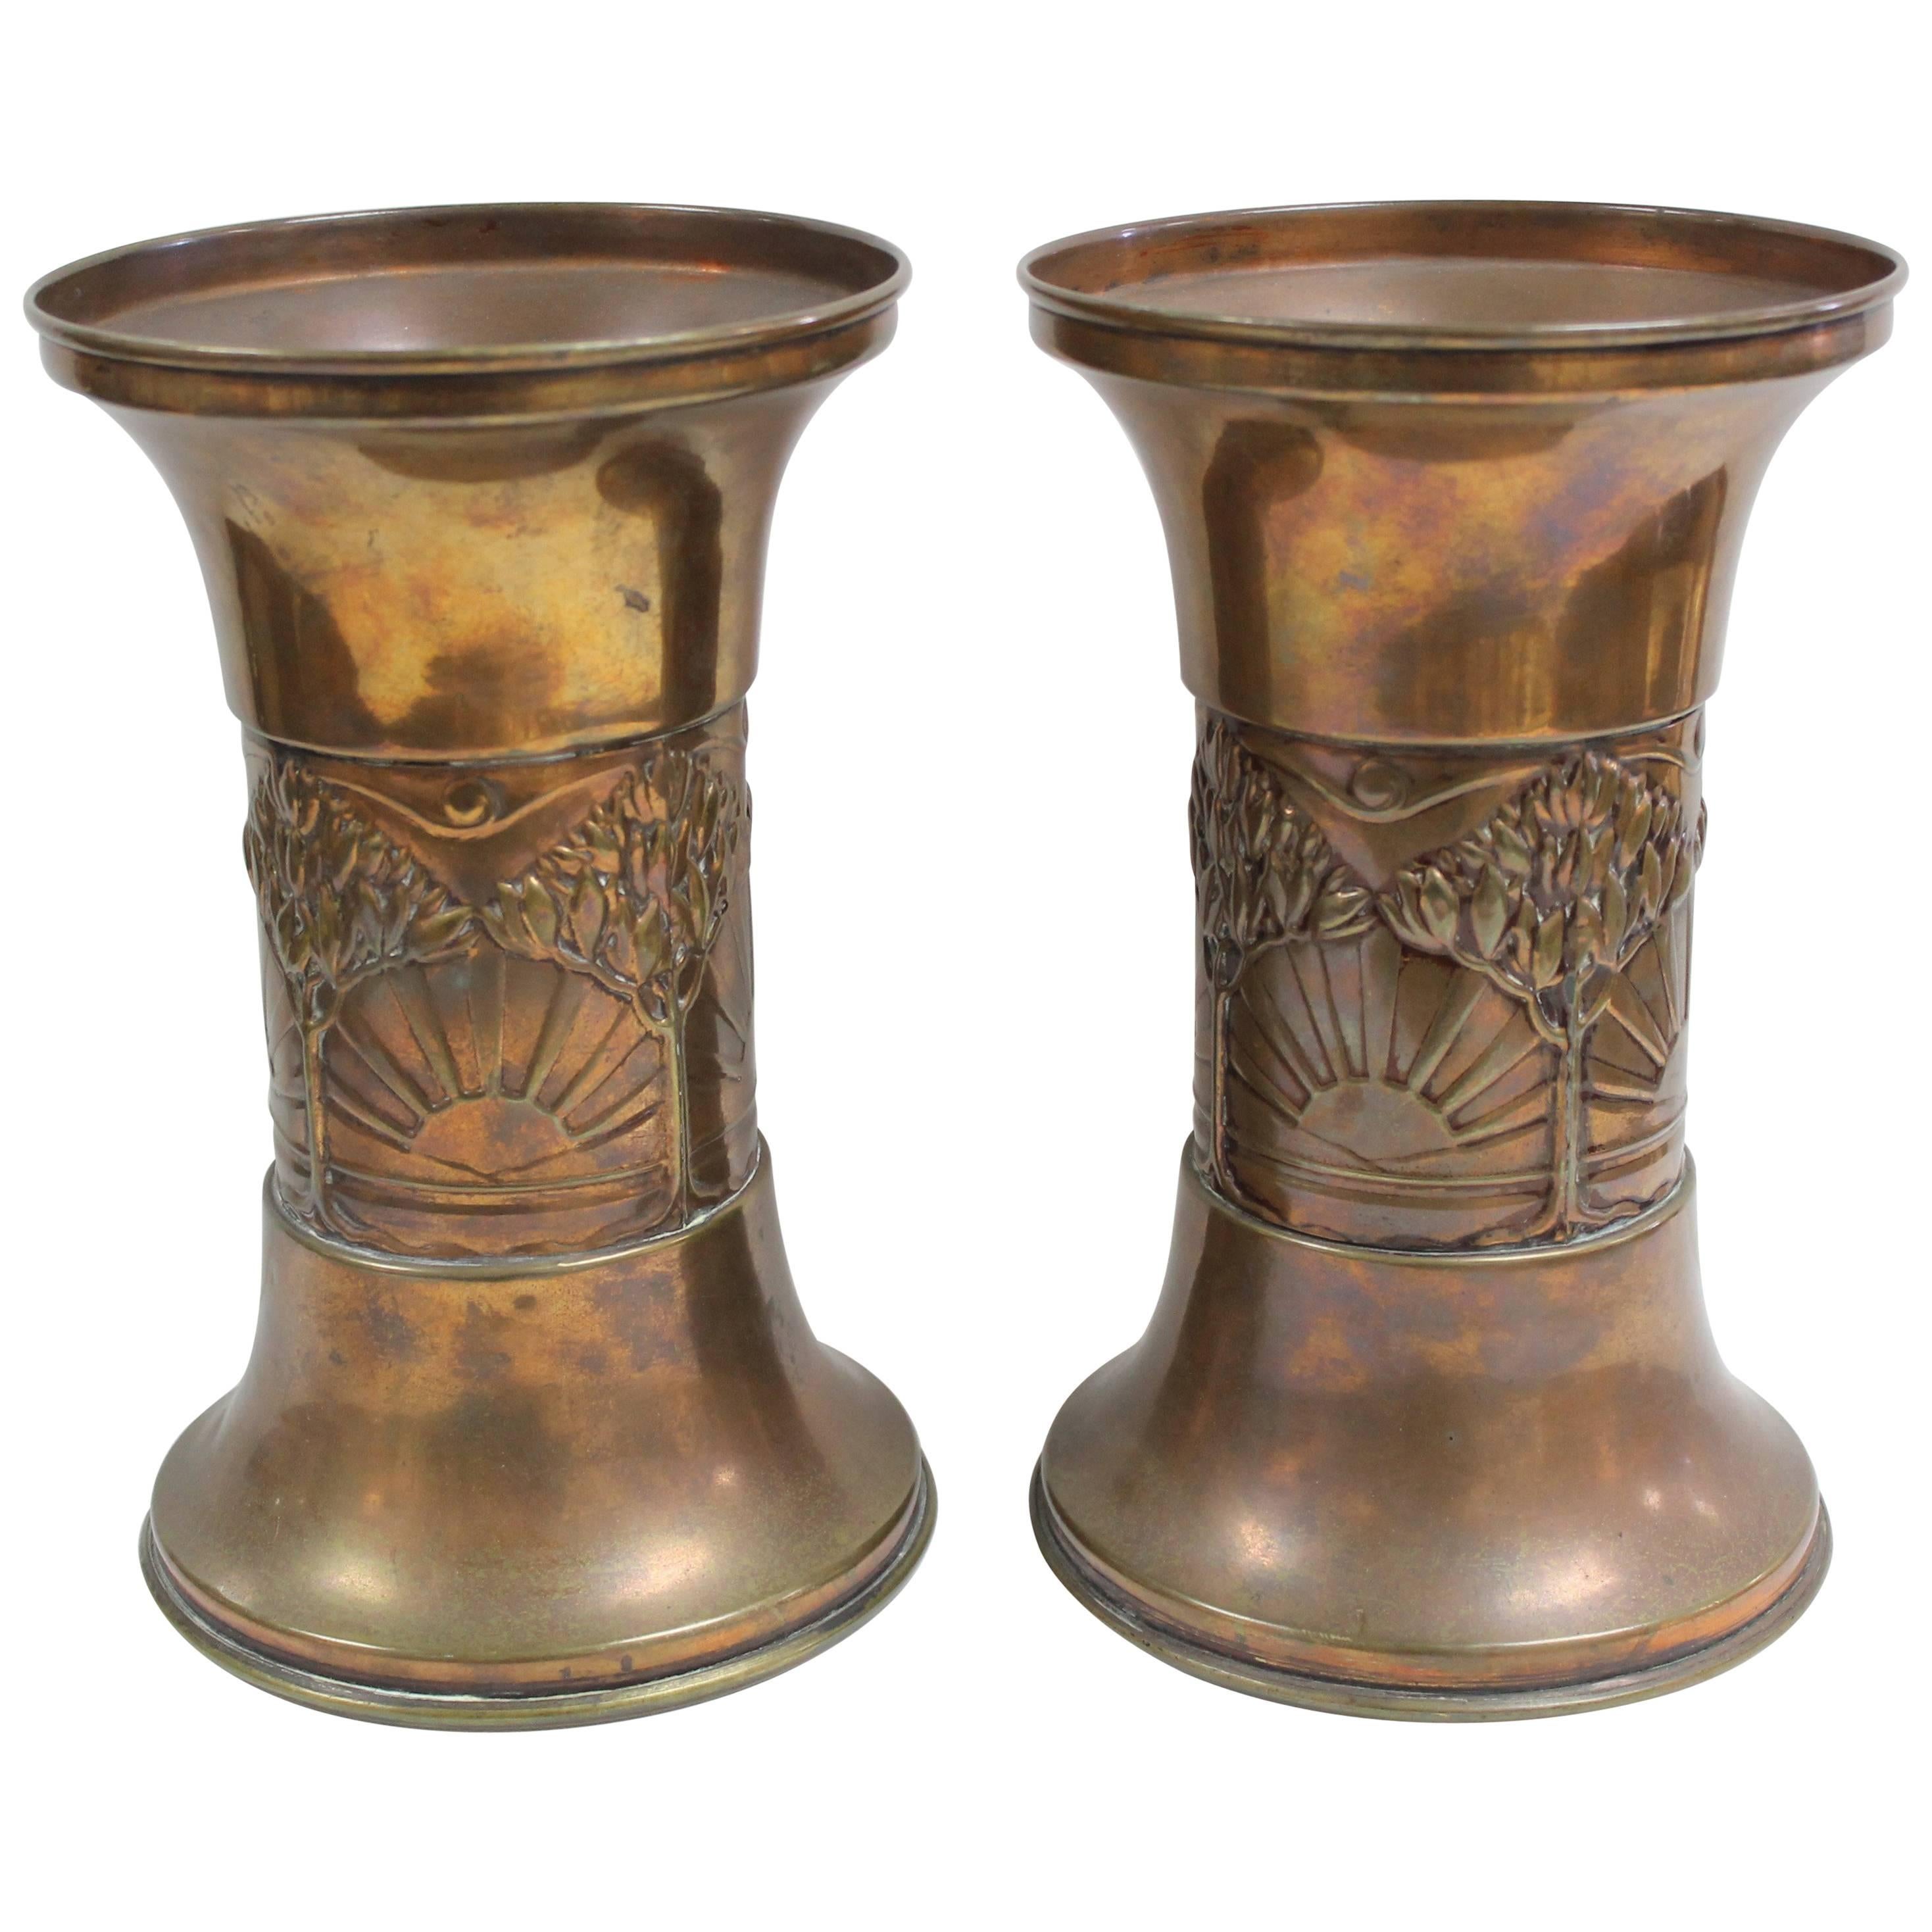 Pair of Brass/Copper Vases